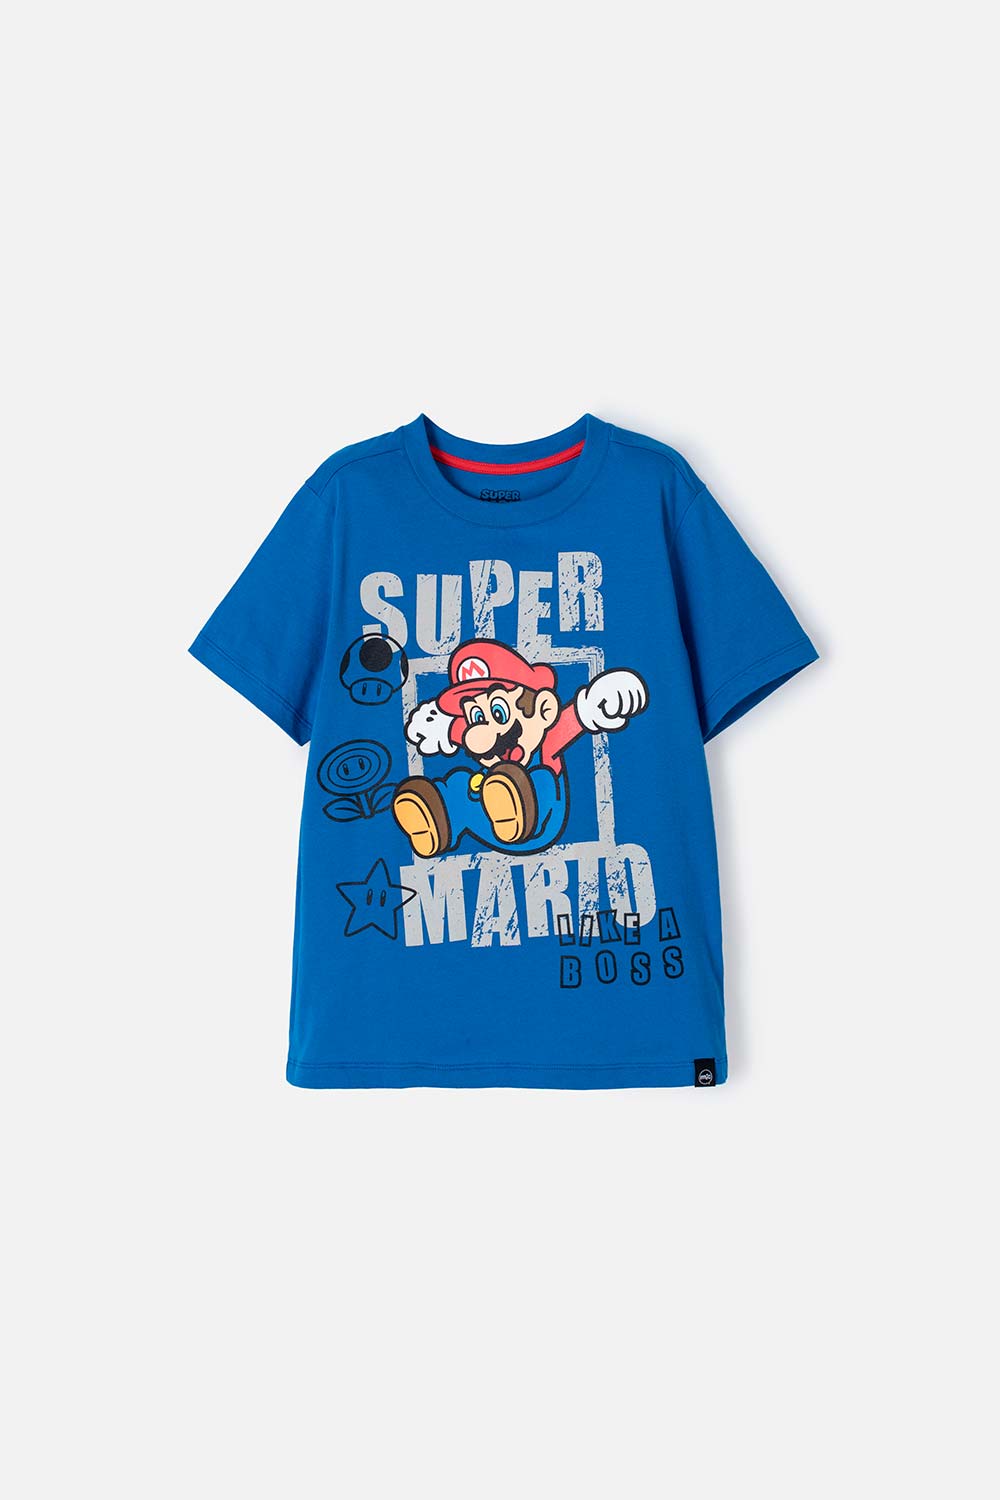 Camiseta de Mario Bros azul estampada en frente para niño 8-0